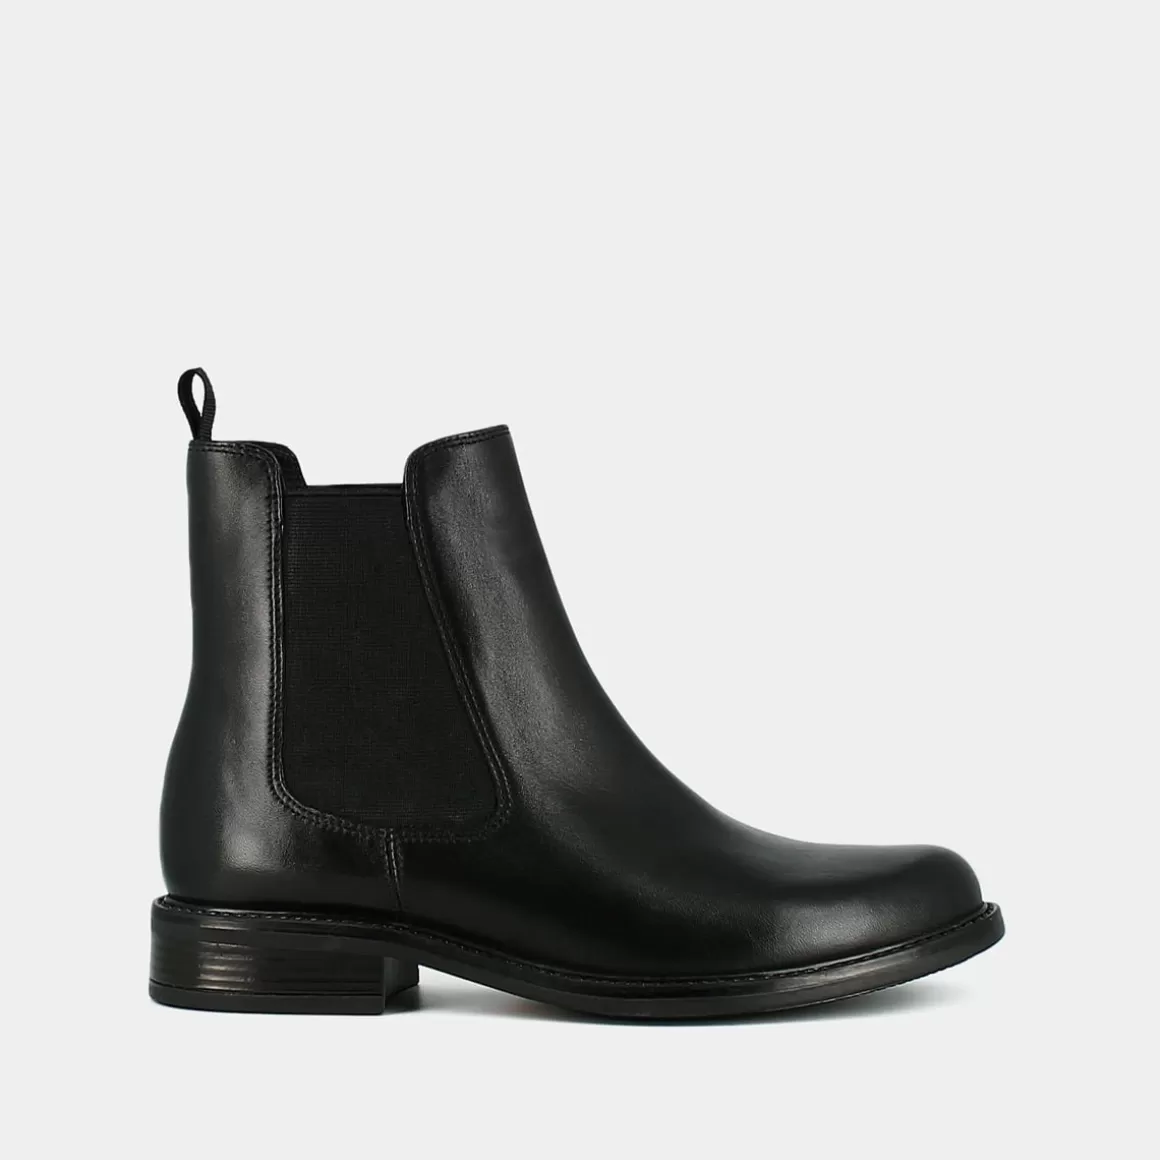 Round-toe boots<Jonak Discount